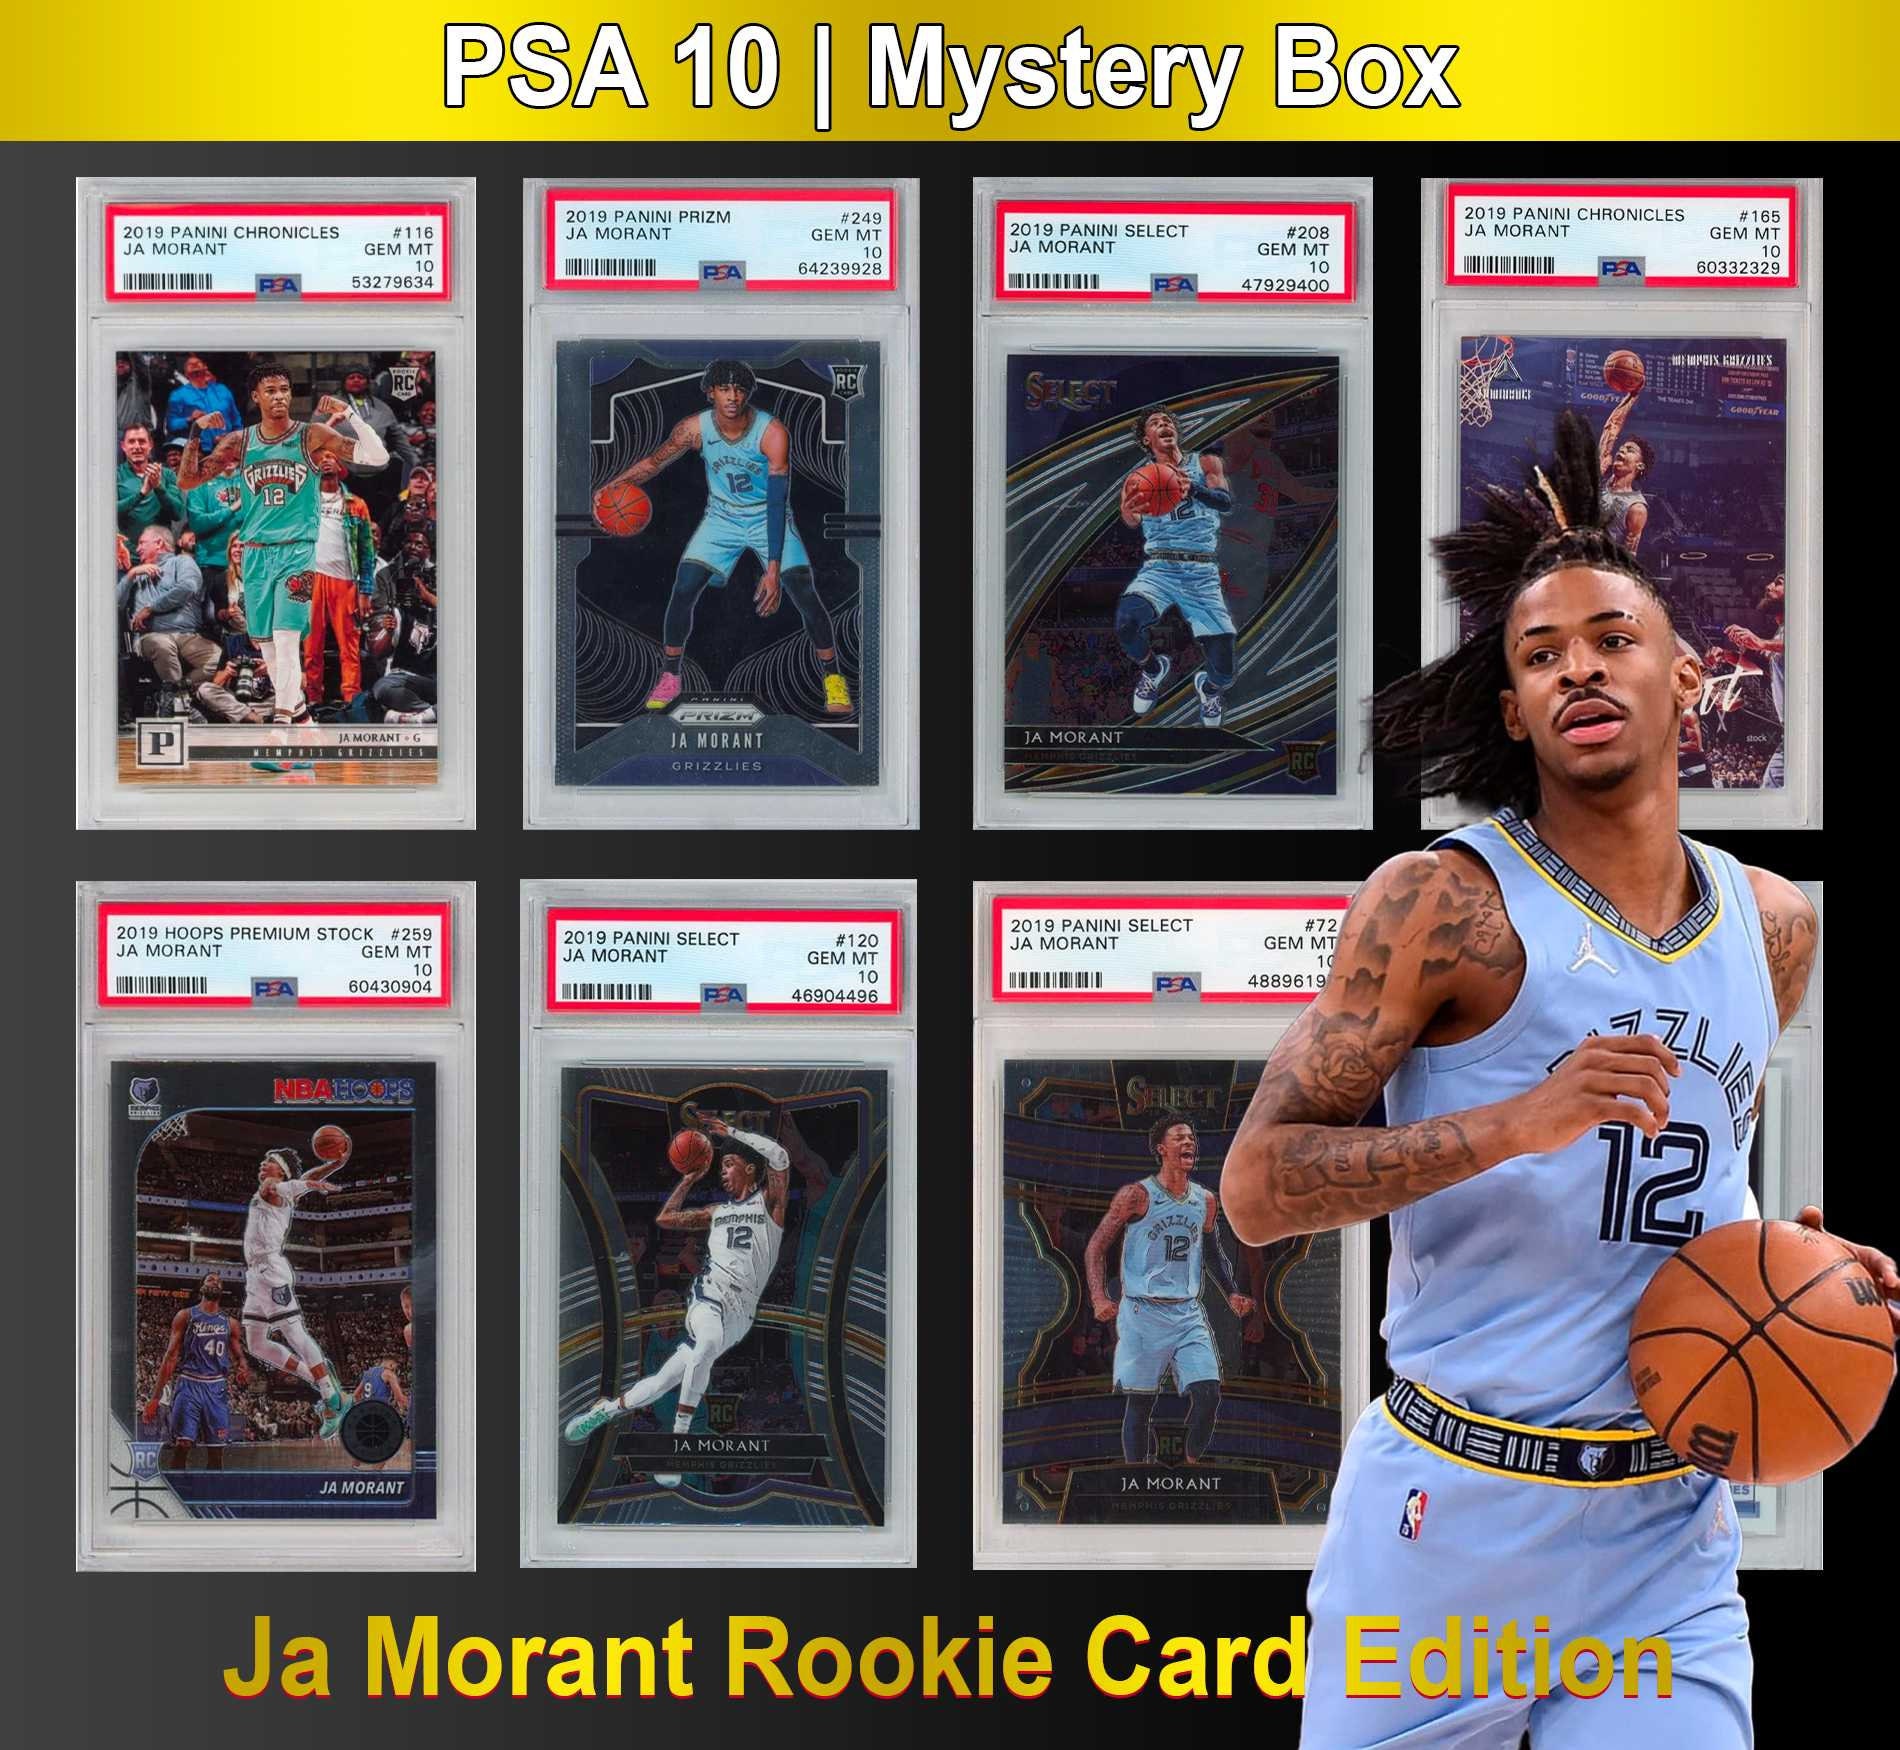 PSA 10 Rookie Card Mystery Morant - Etsy